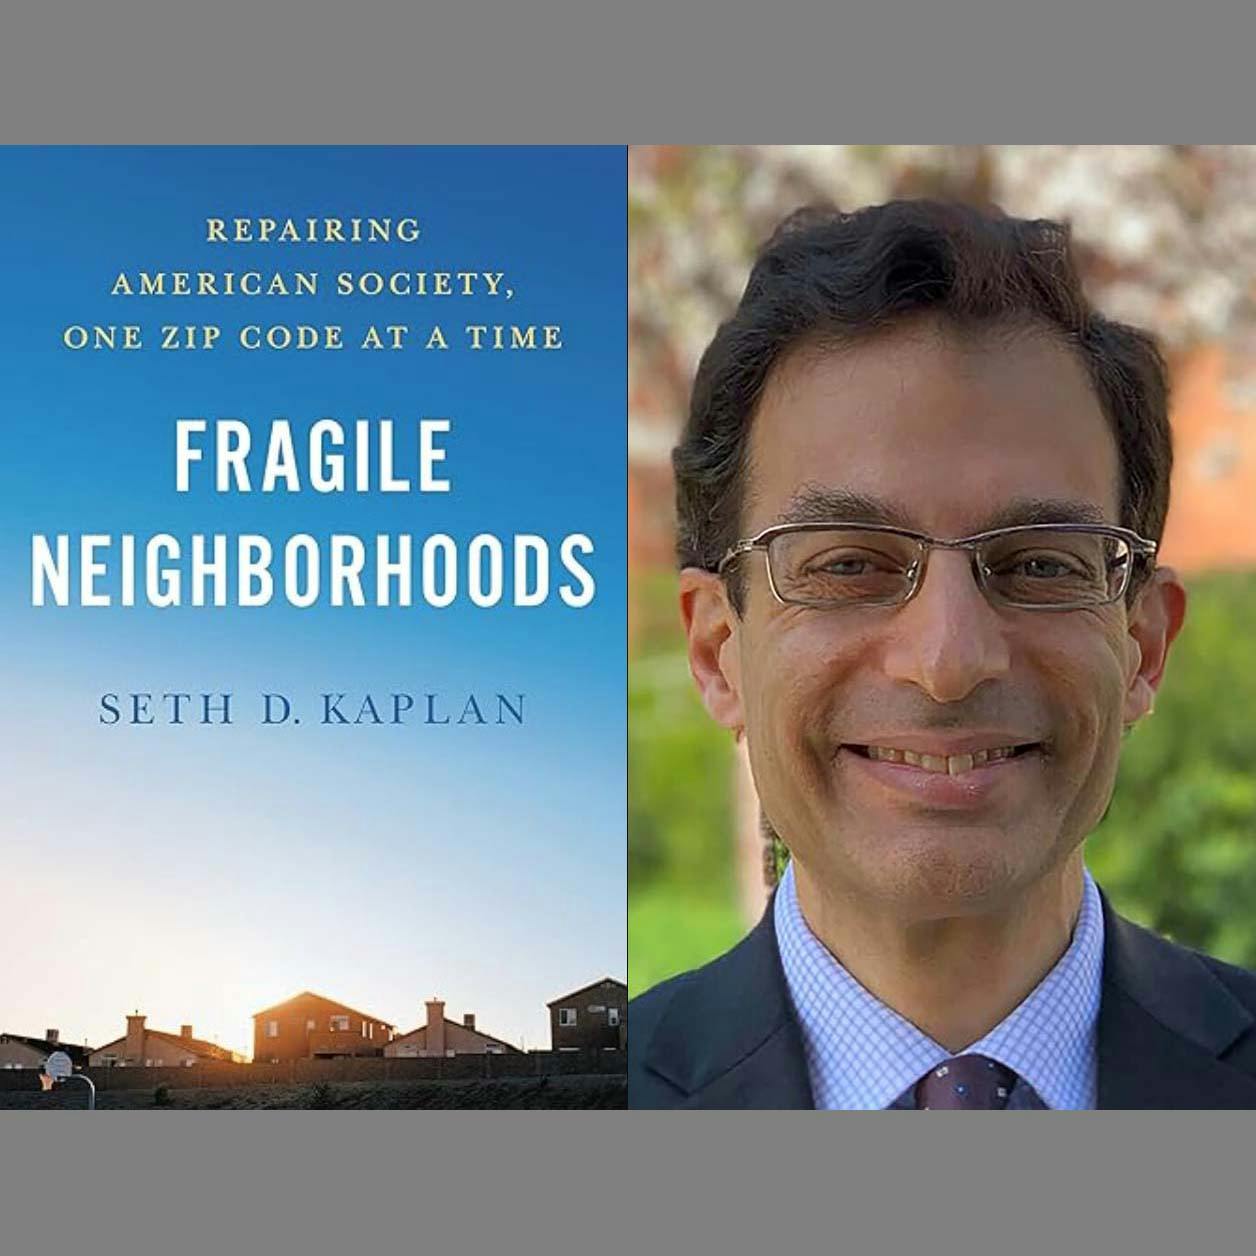 Seth Kaplan on Repairing America’s Fragile Neighborhoods